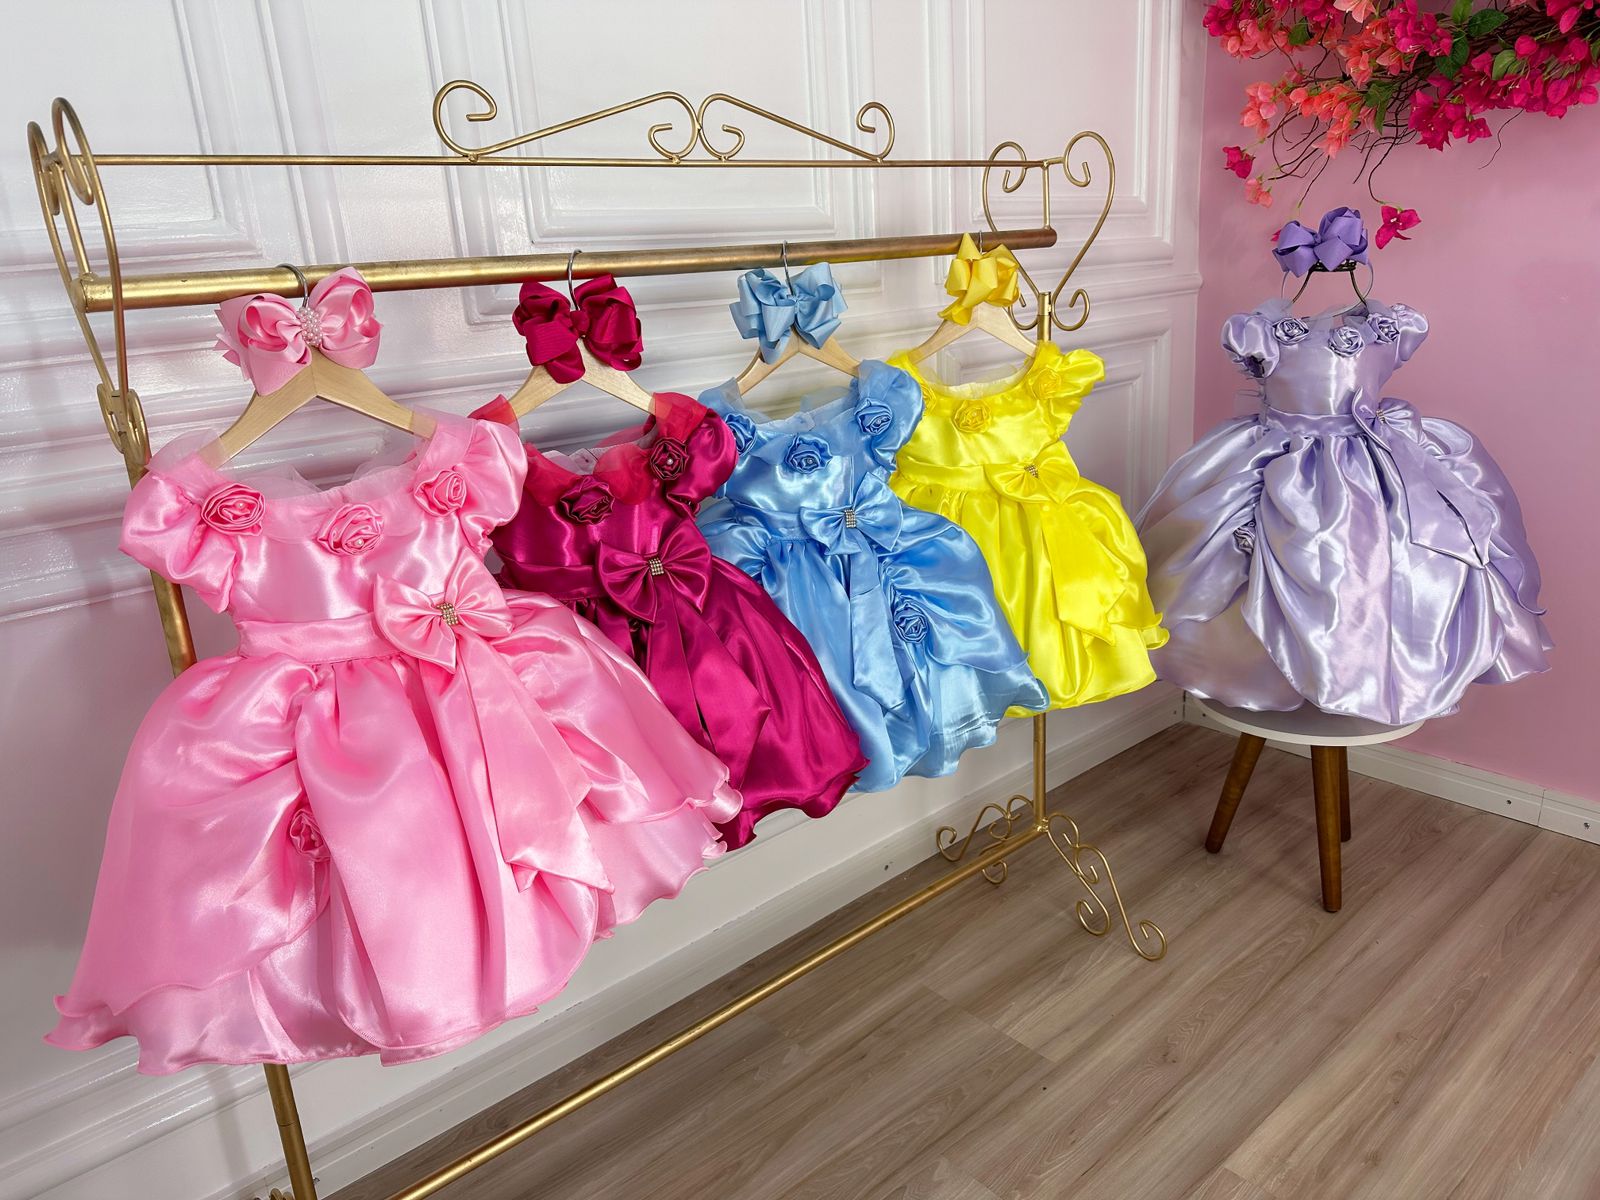 Vestido Infantil Lilás Princesa Sofia Apliques de Flores - Fabuloso Ateliê